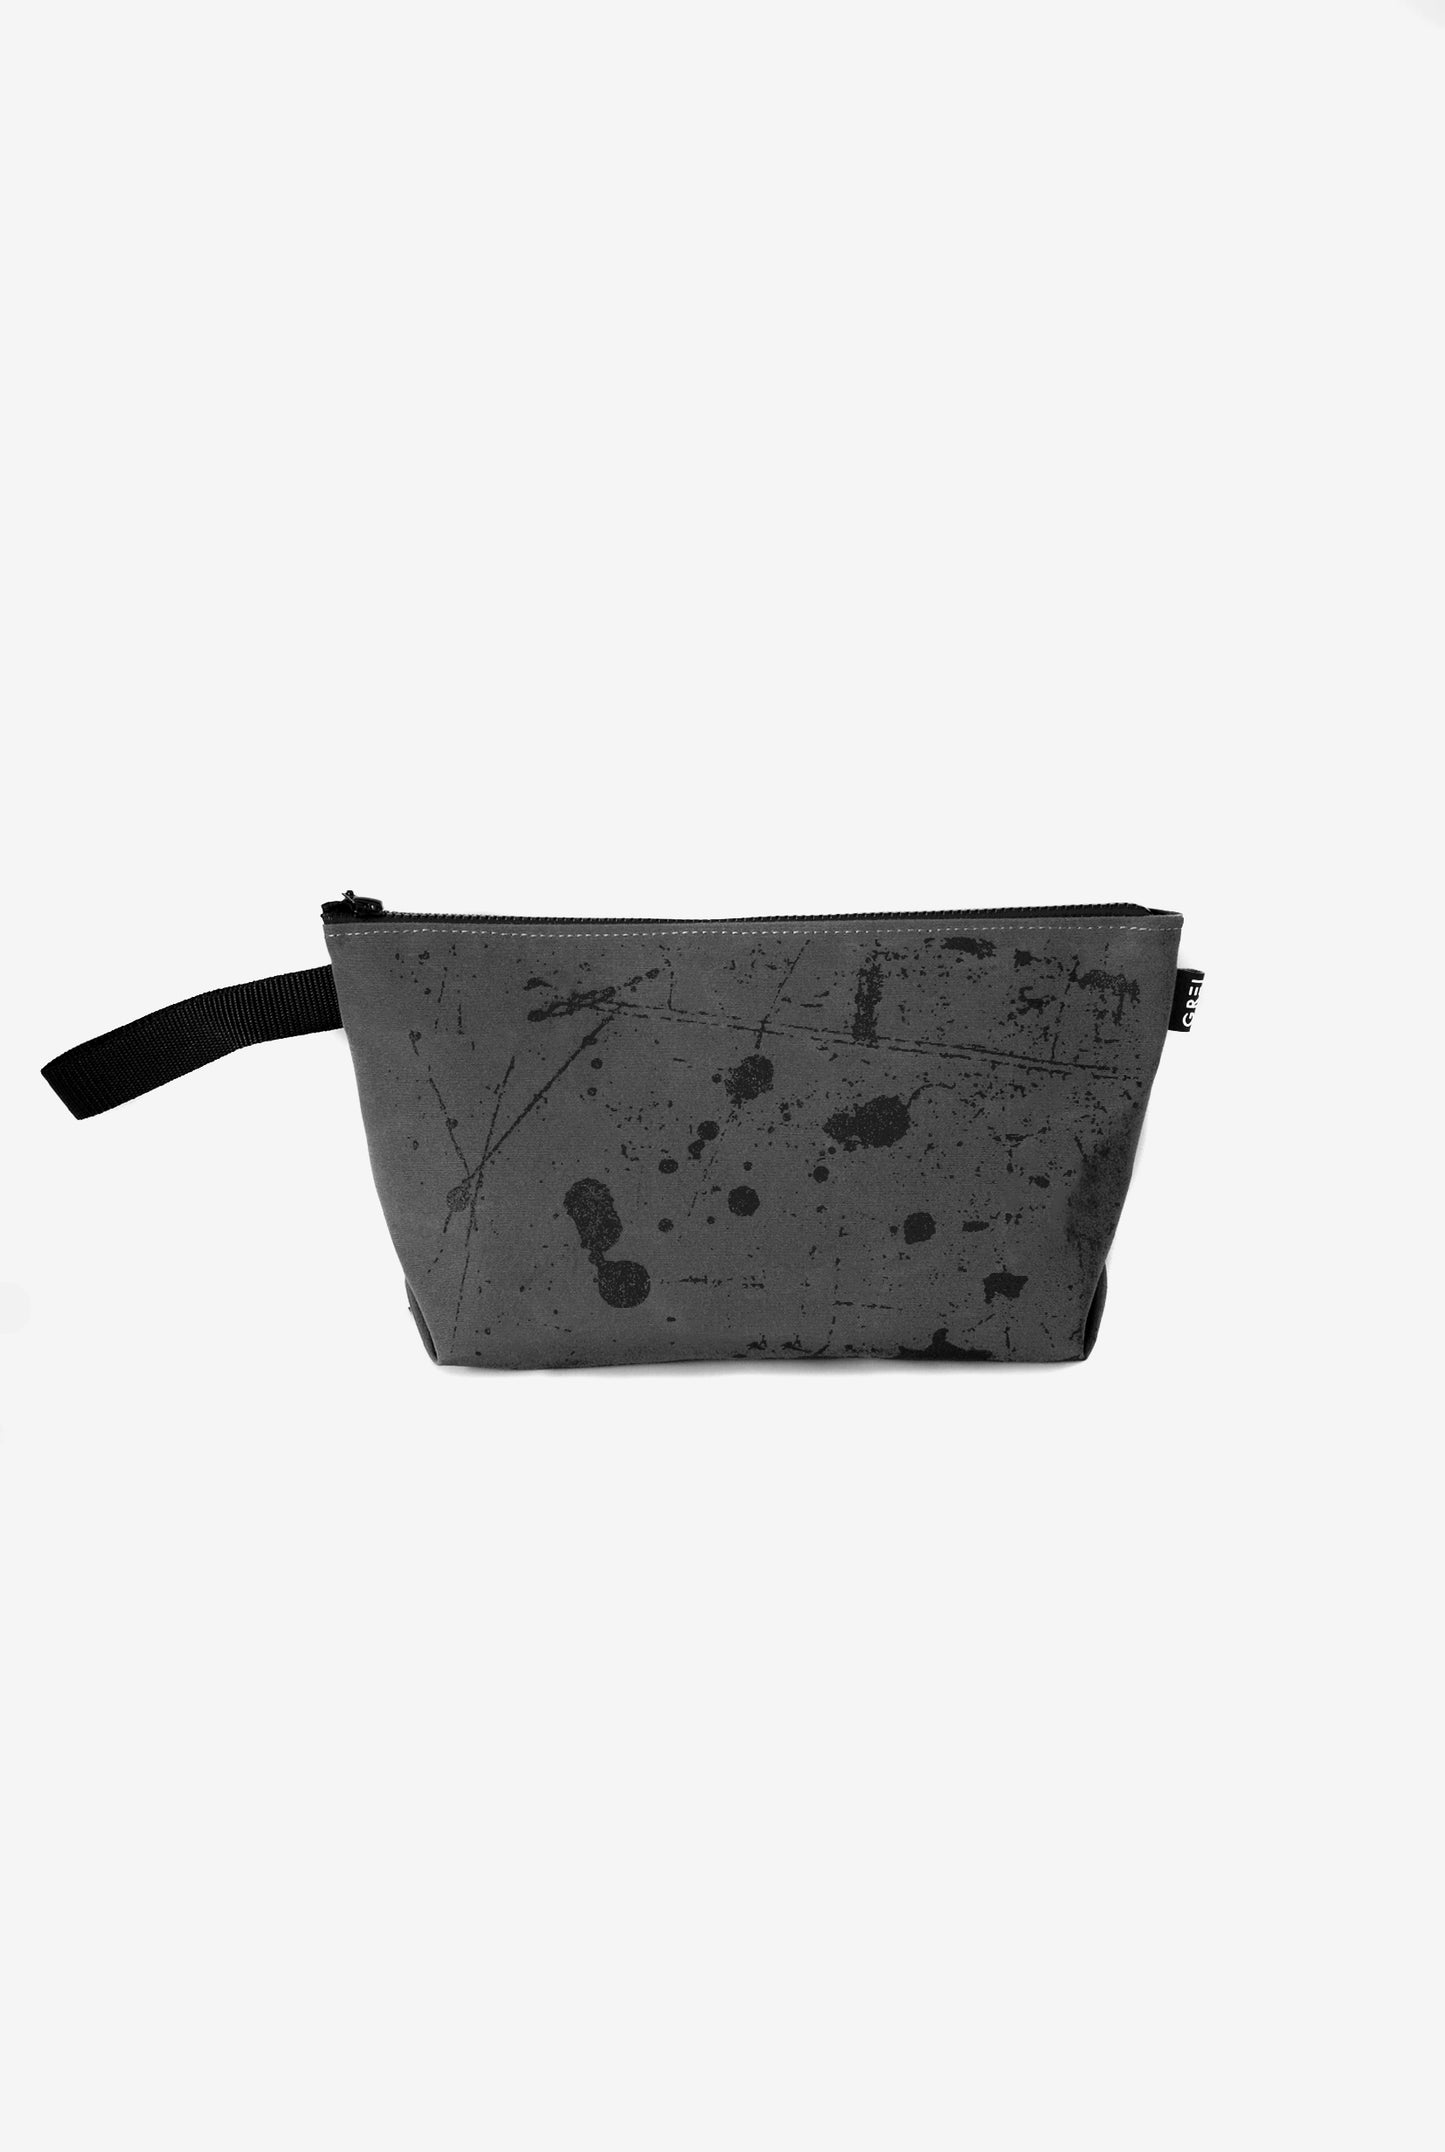 GREI Zipper bag splash Dark grey-black